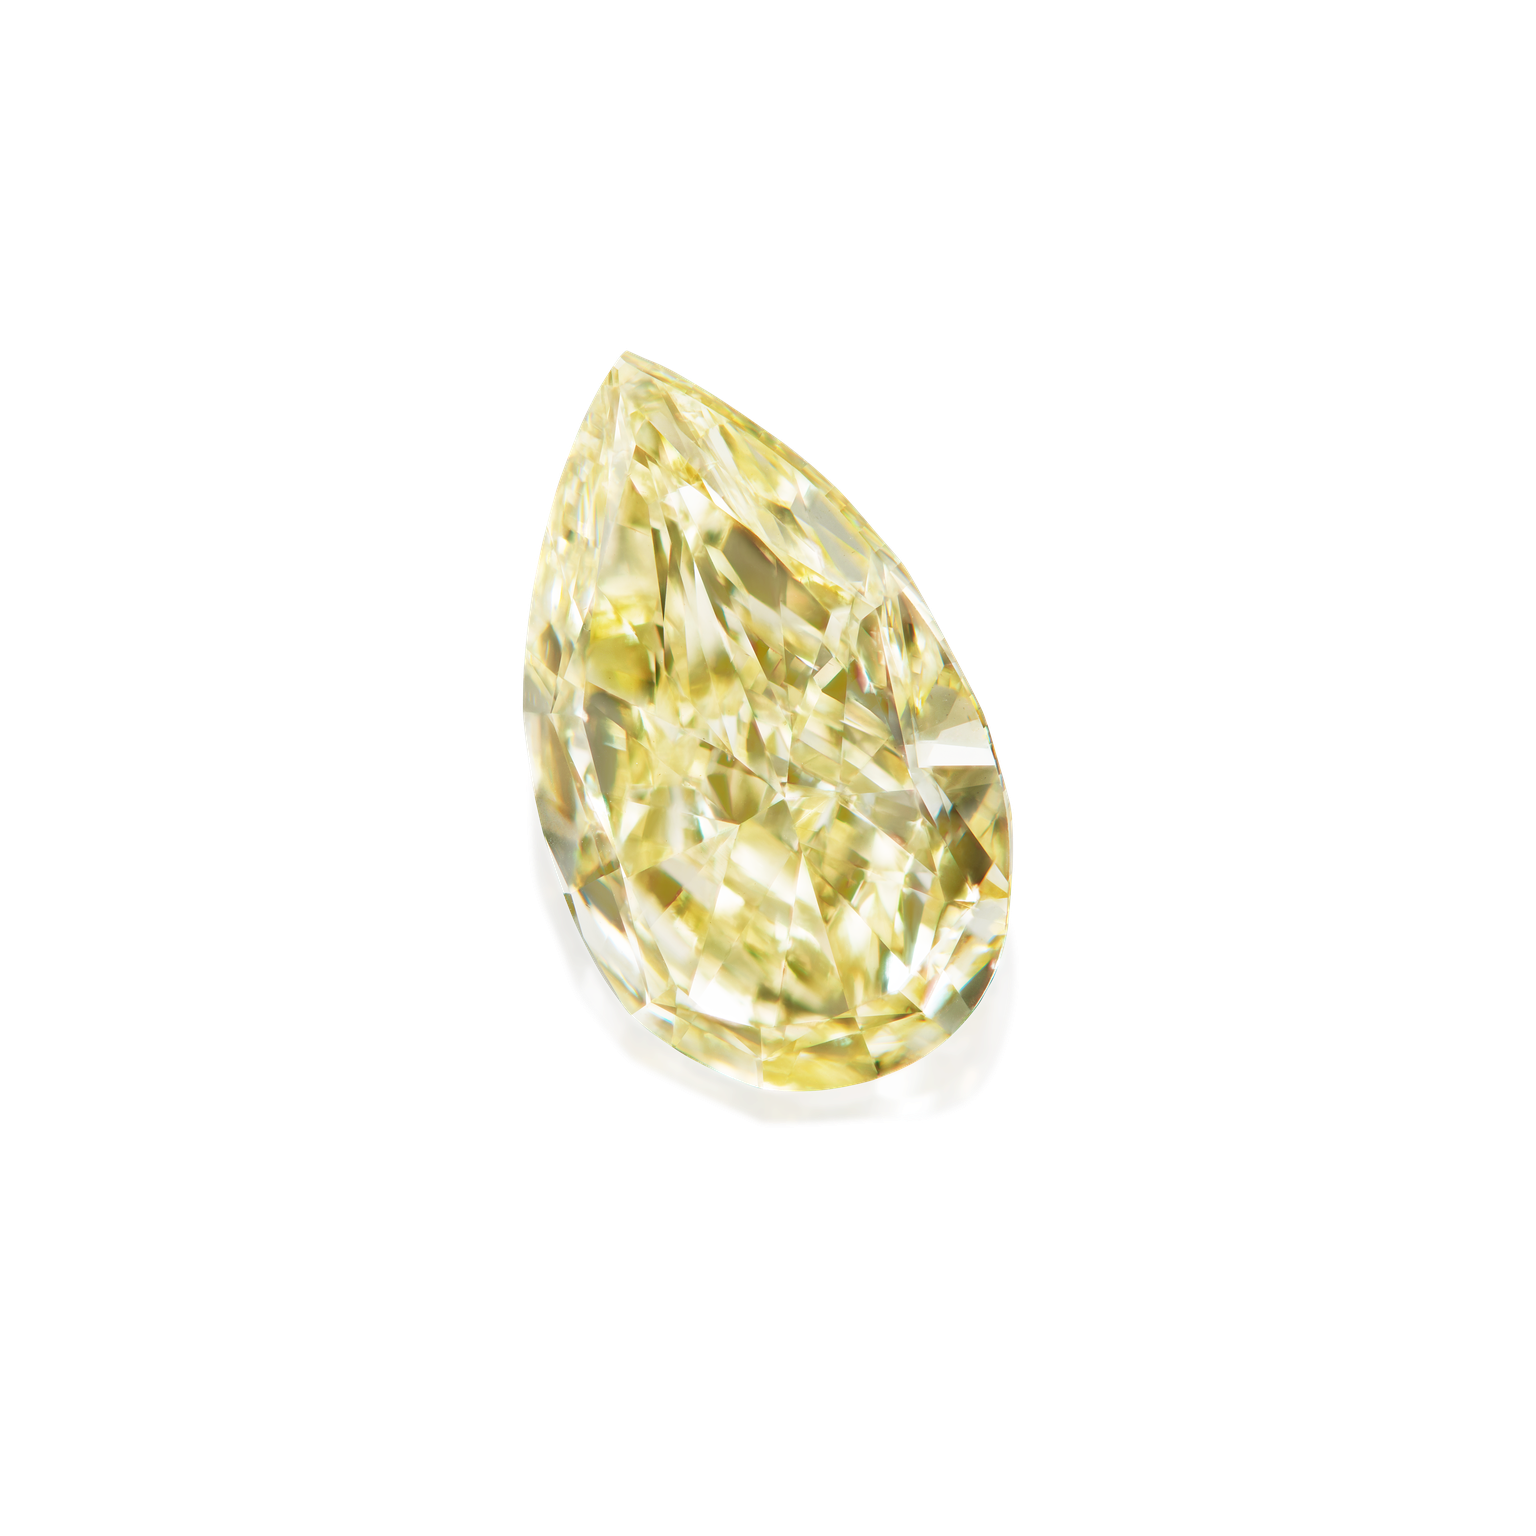 8.78cts Loose Pear-Cut Yellow Diamond